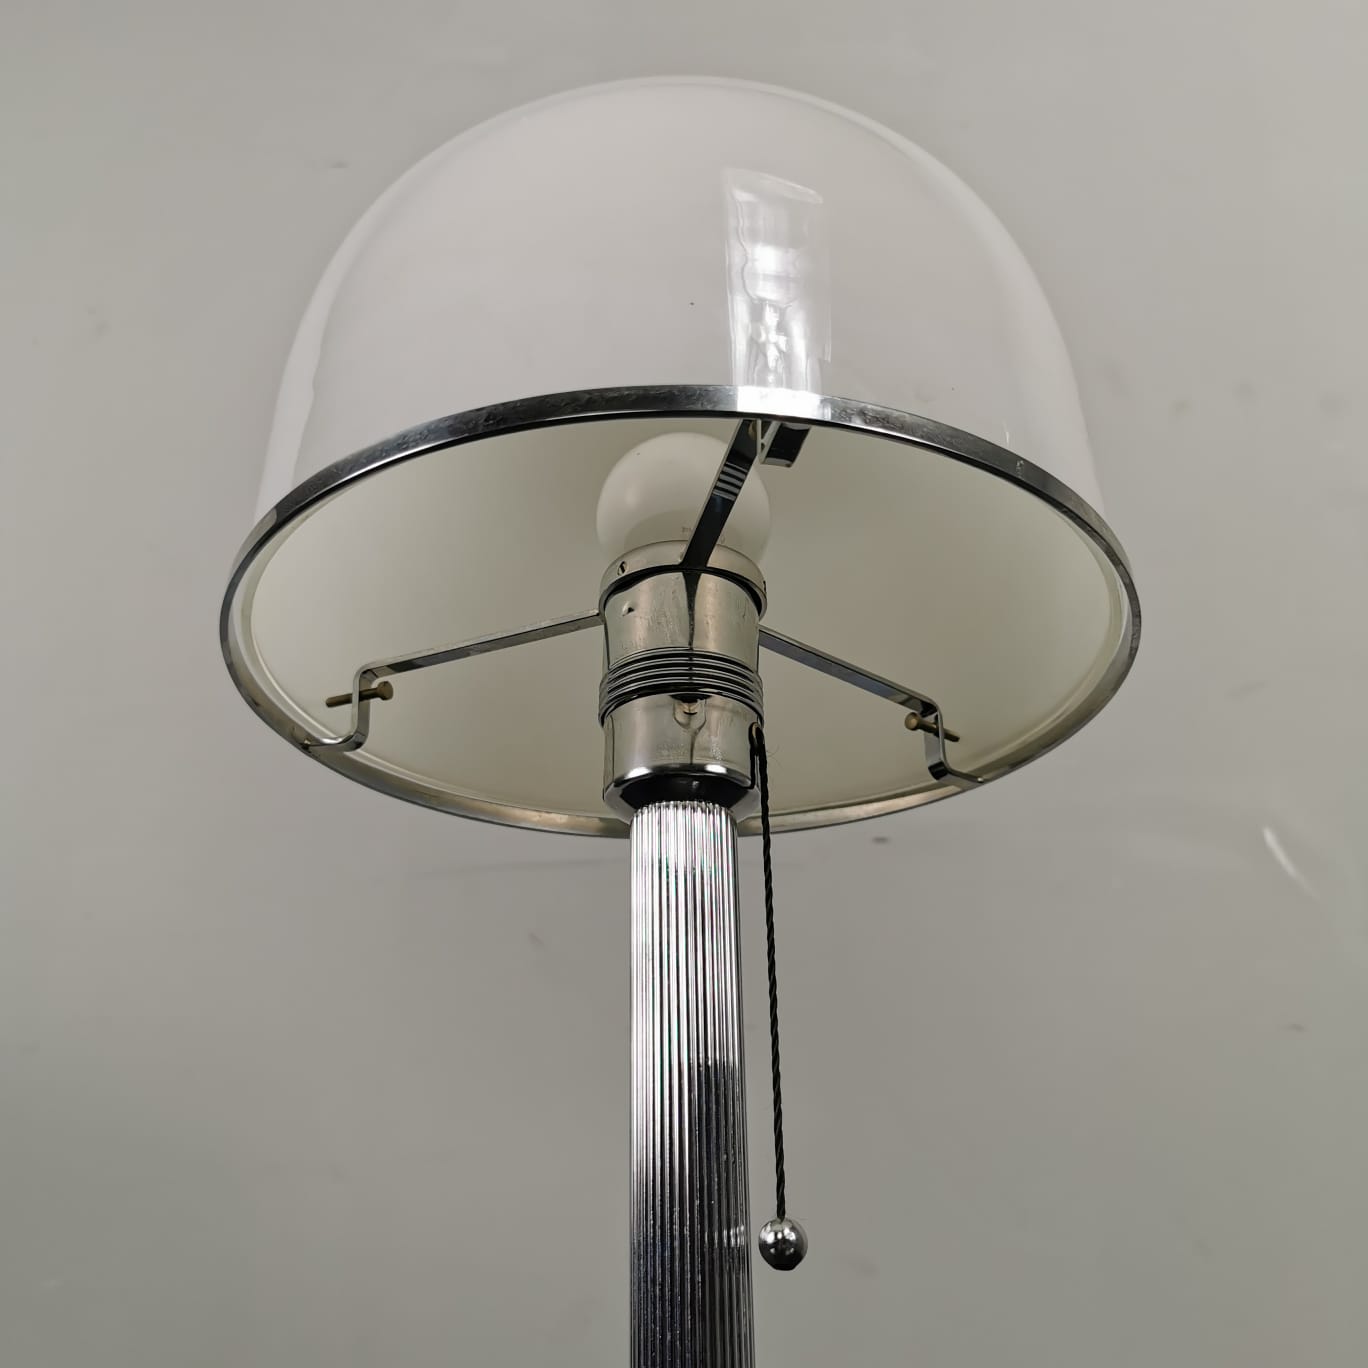 Lampada da tavolo in vetro Stile Bauhaus Wagenfelds WG 24 1980's